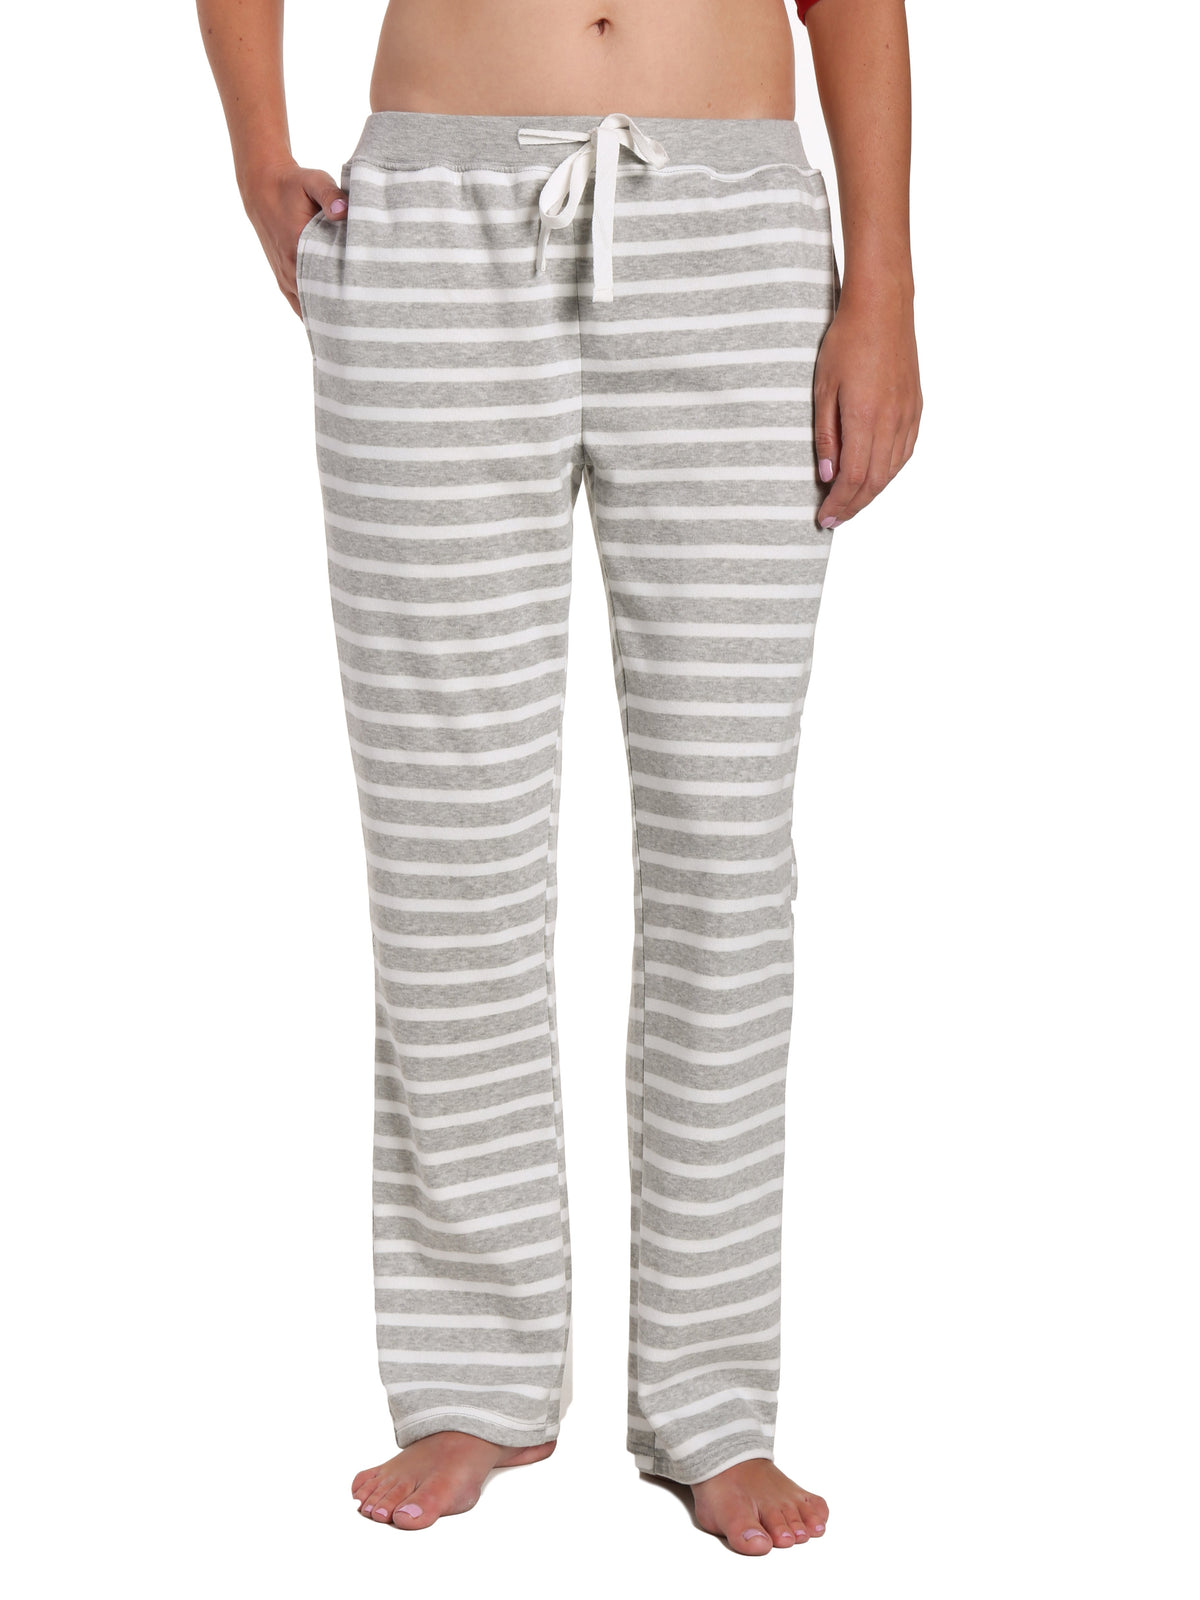 Womens Towel Brushed Sweatpants - Stripes Grey White